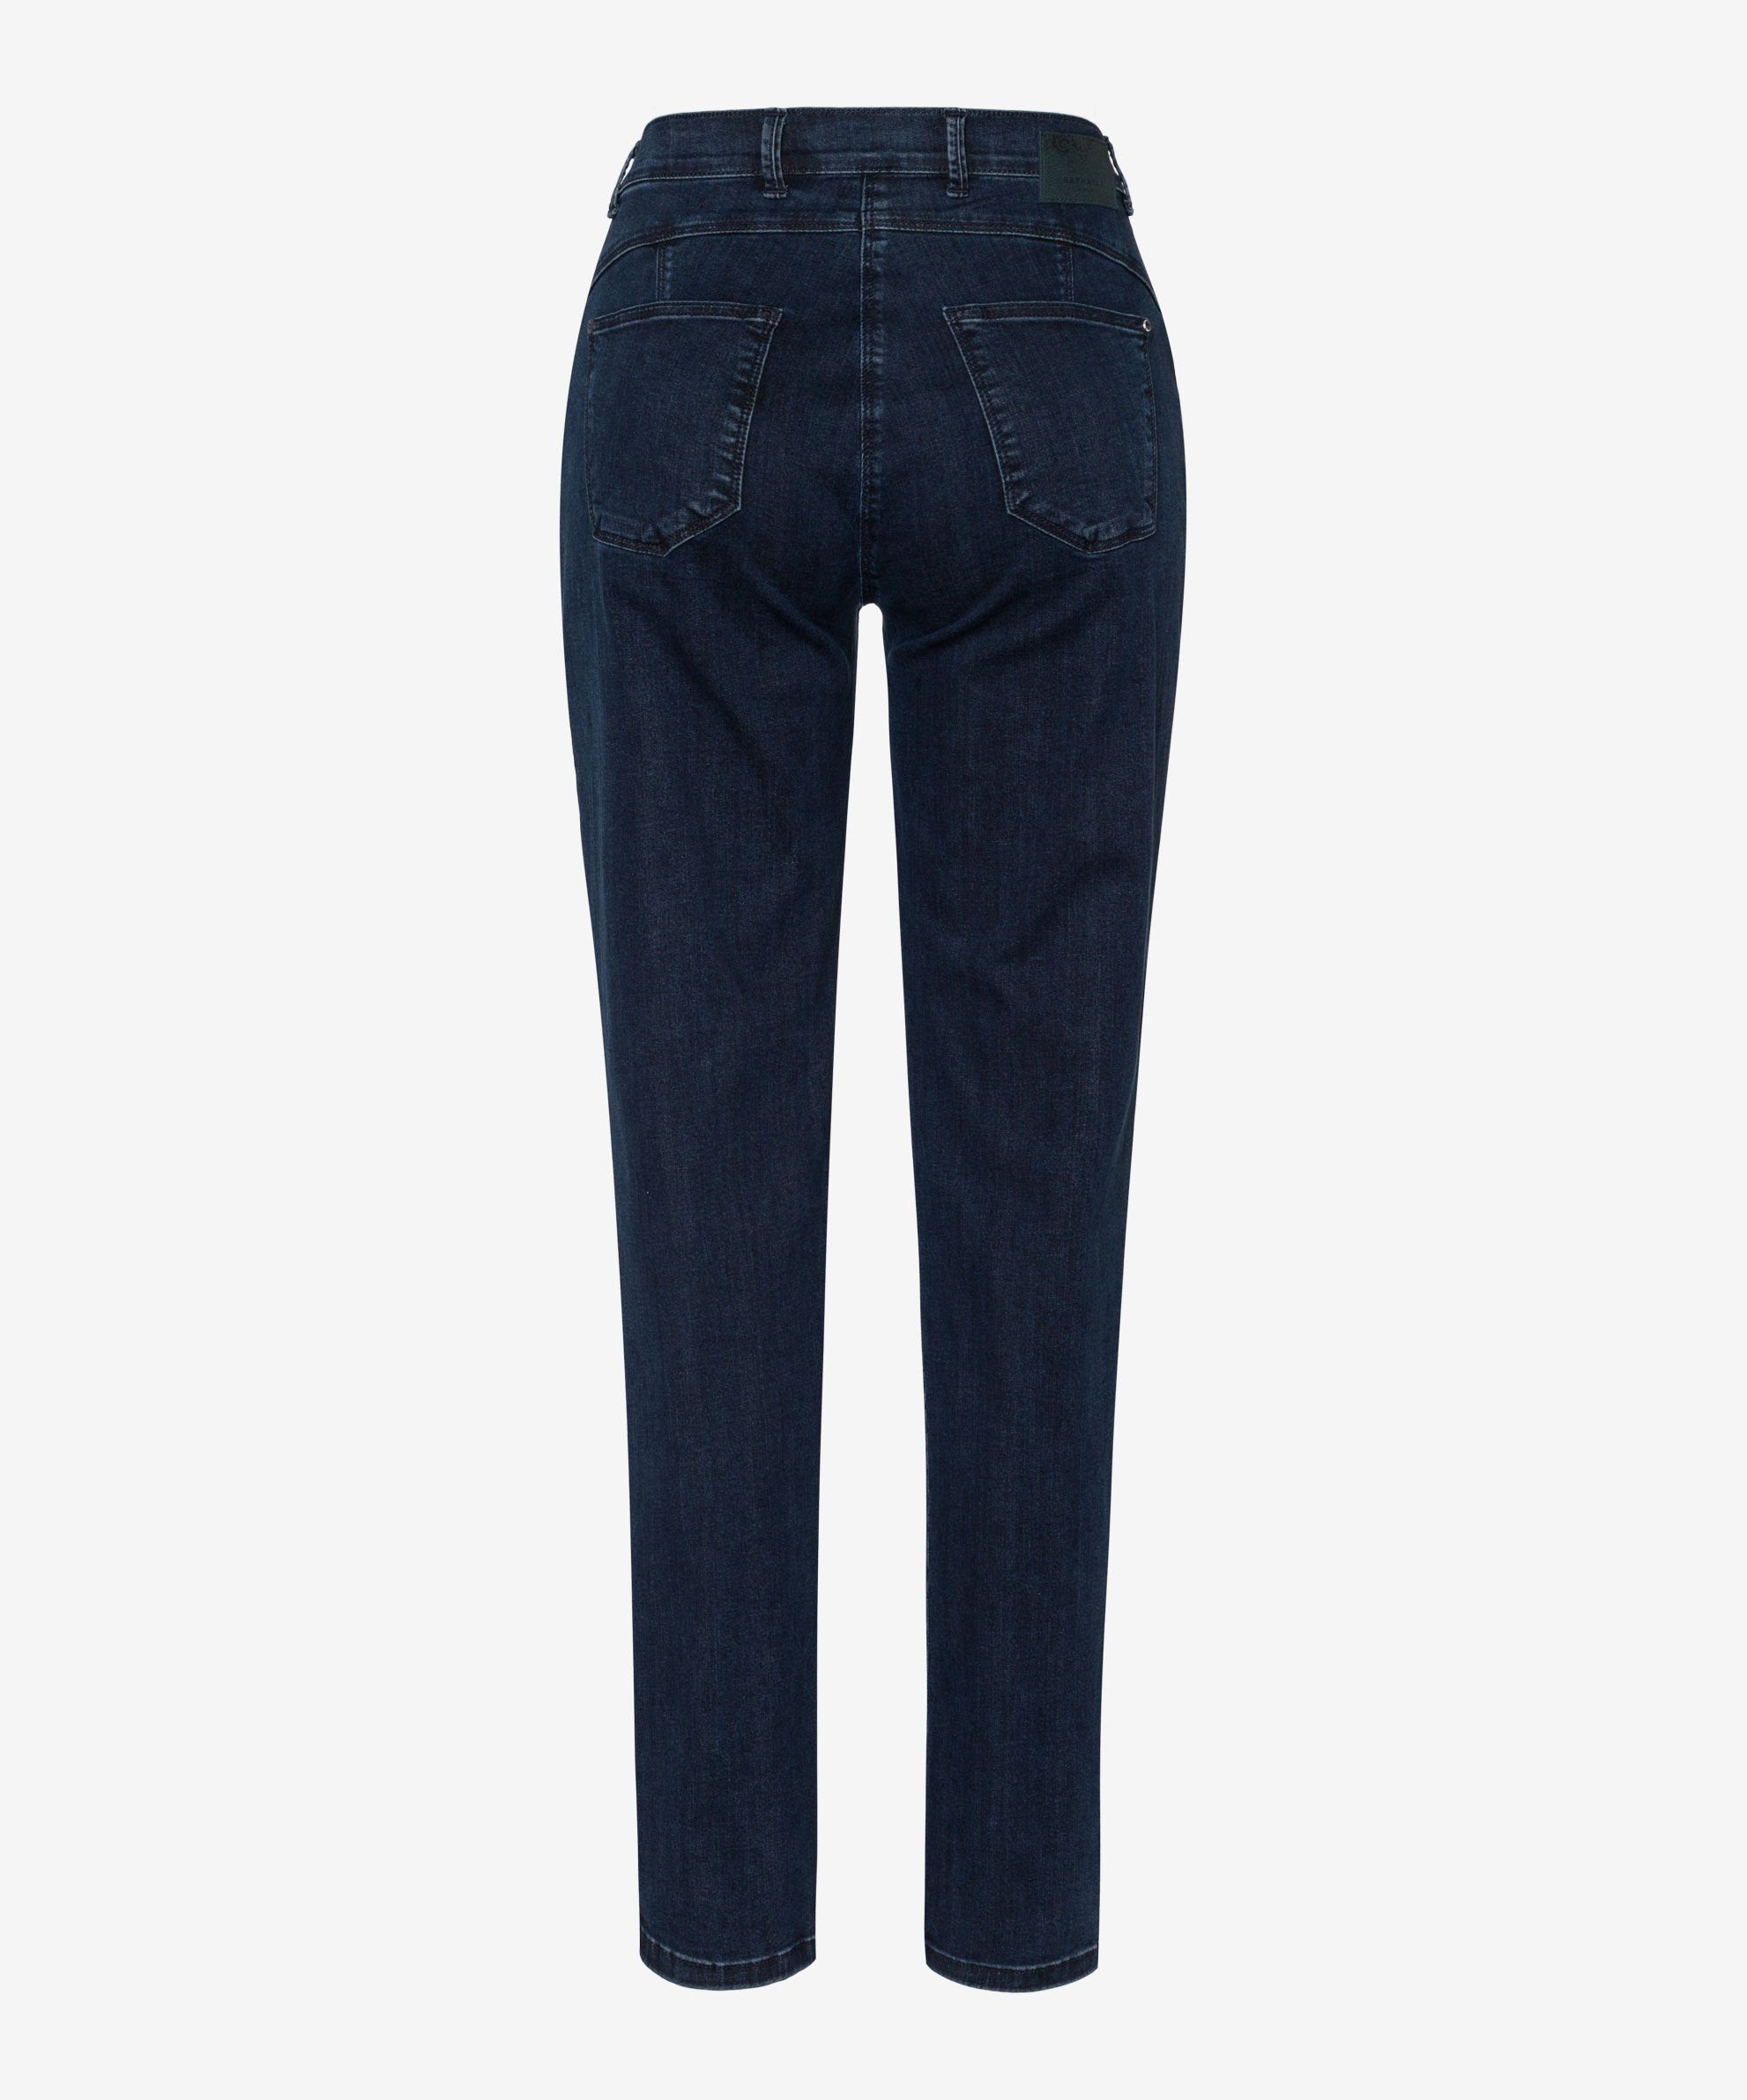 RAPHAELA by BRAX 5-Pocket-Jeans blue Style dark Caren